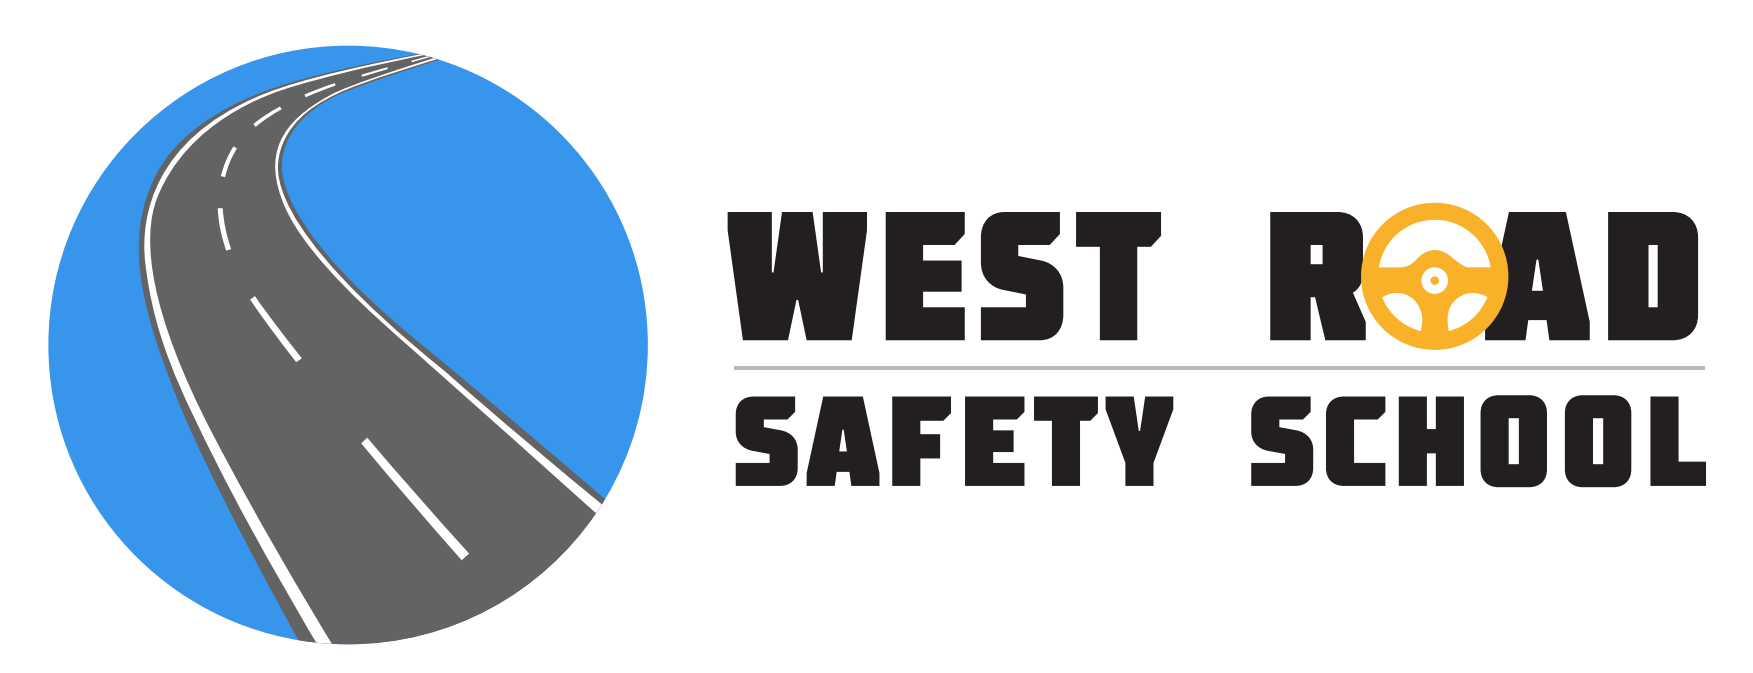 West Road Safety School – Felix Coriano